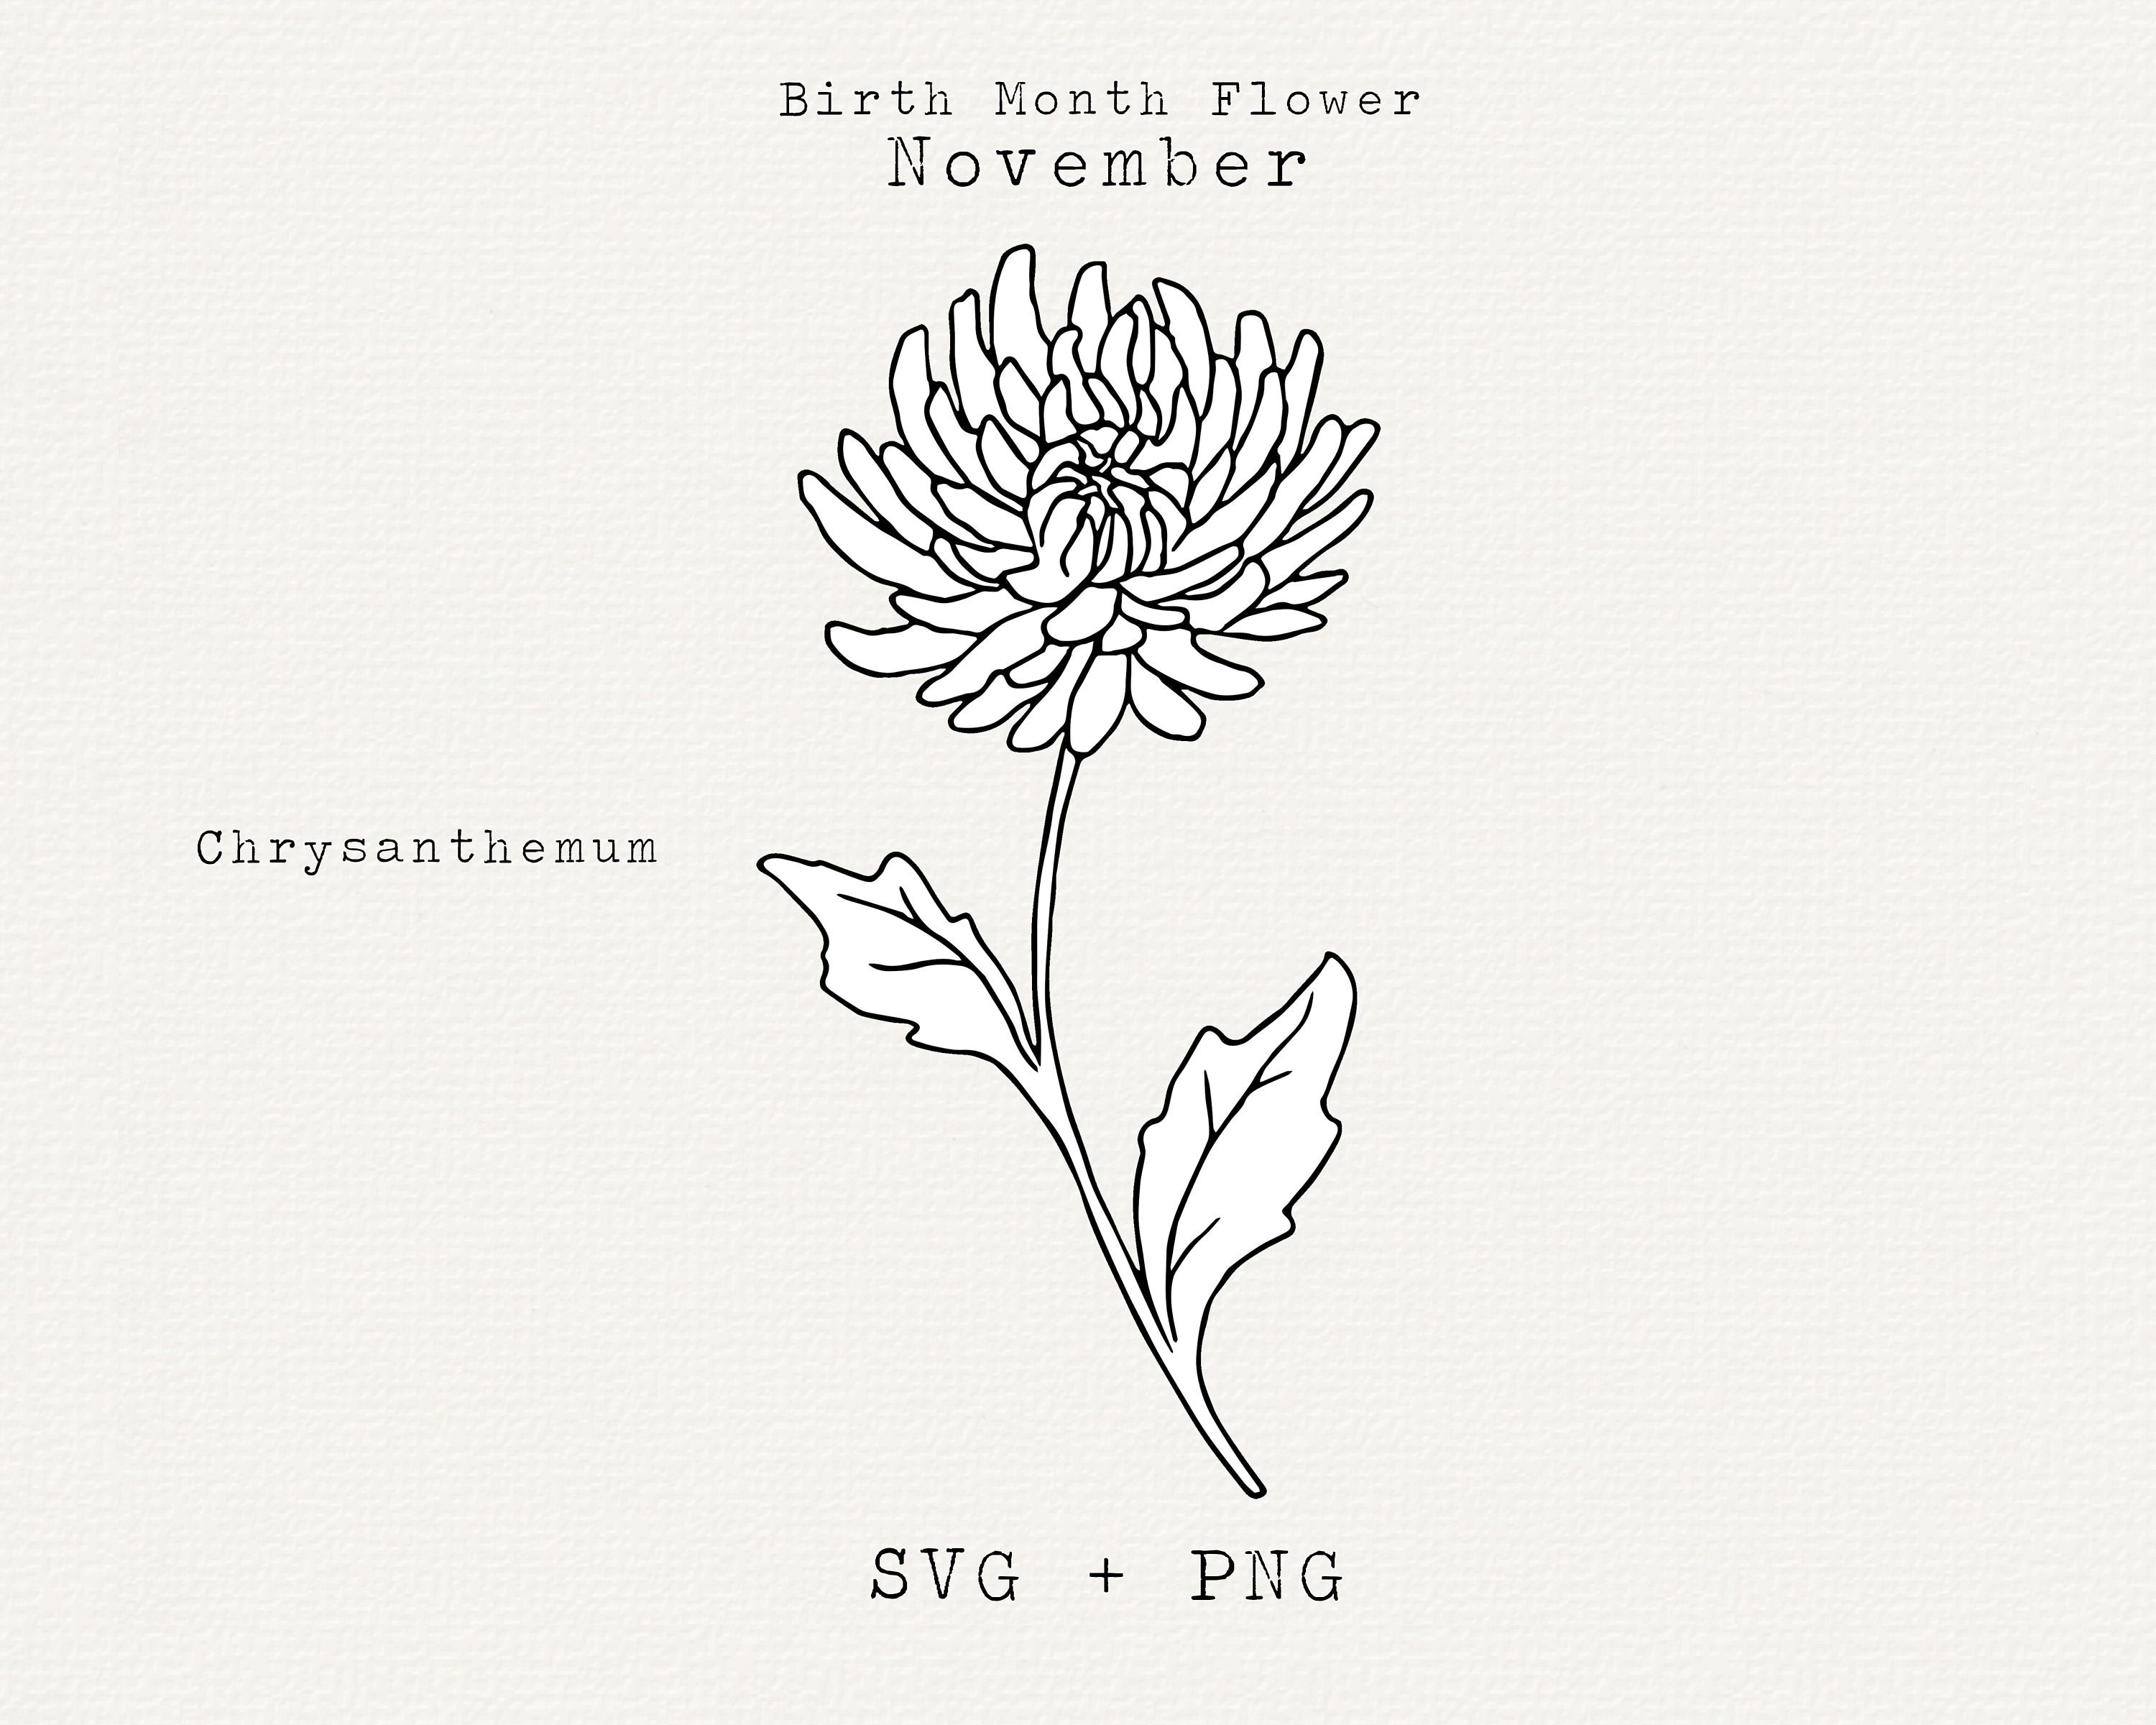 Chrysanthemum SVG, Chrysanthemum Flower Hand Drawn Clipart